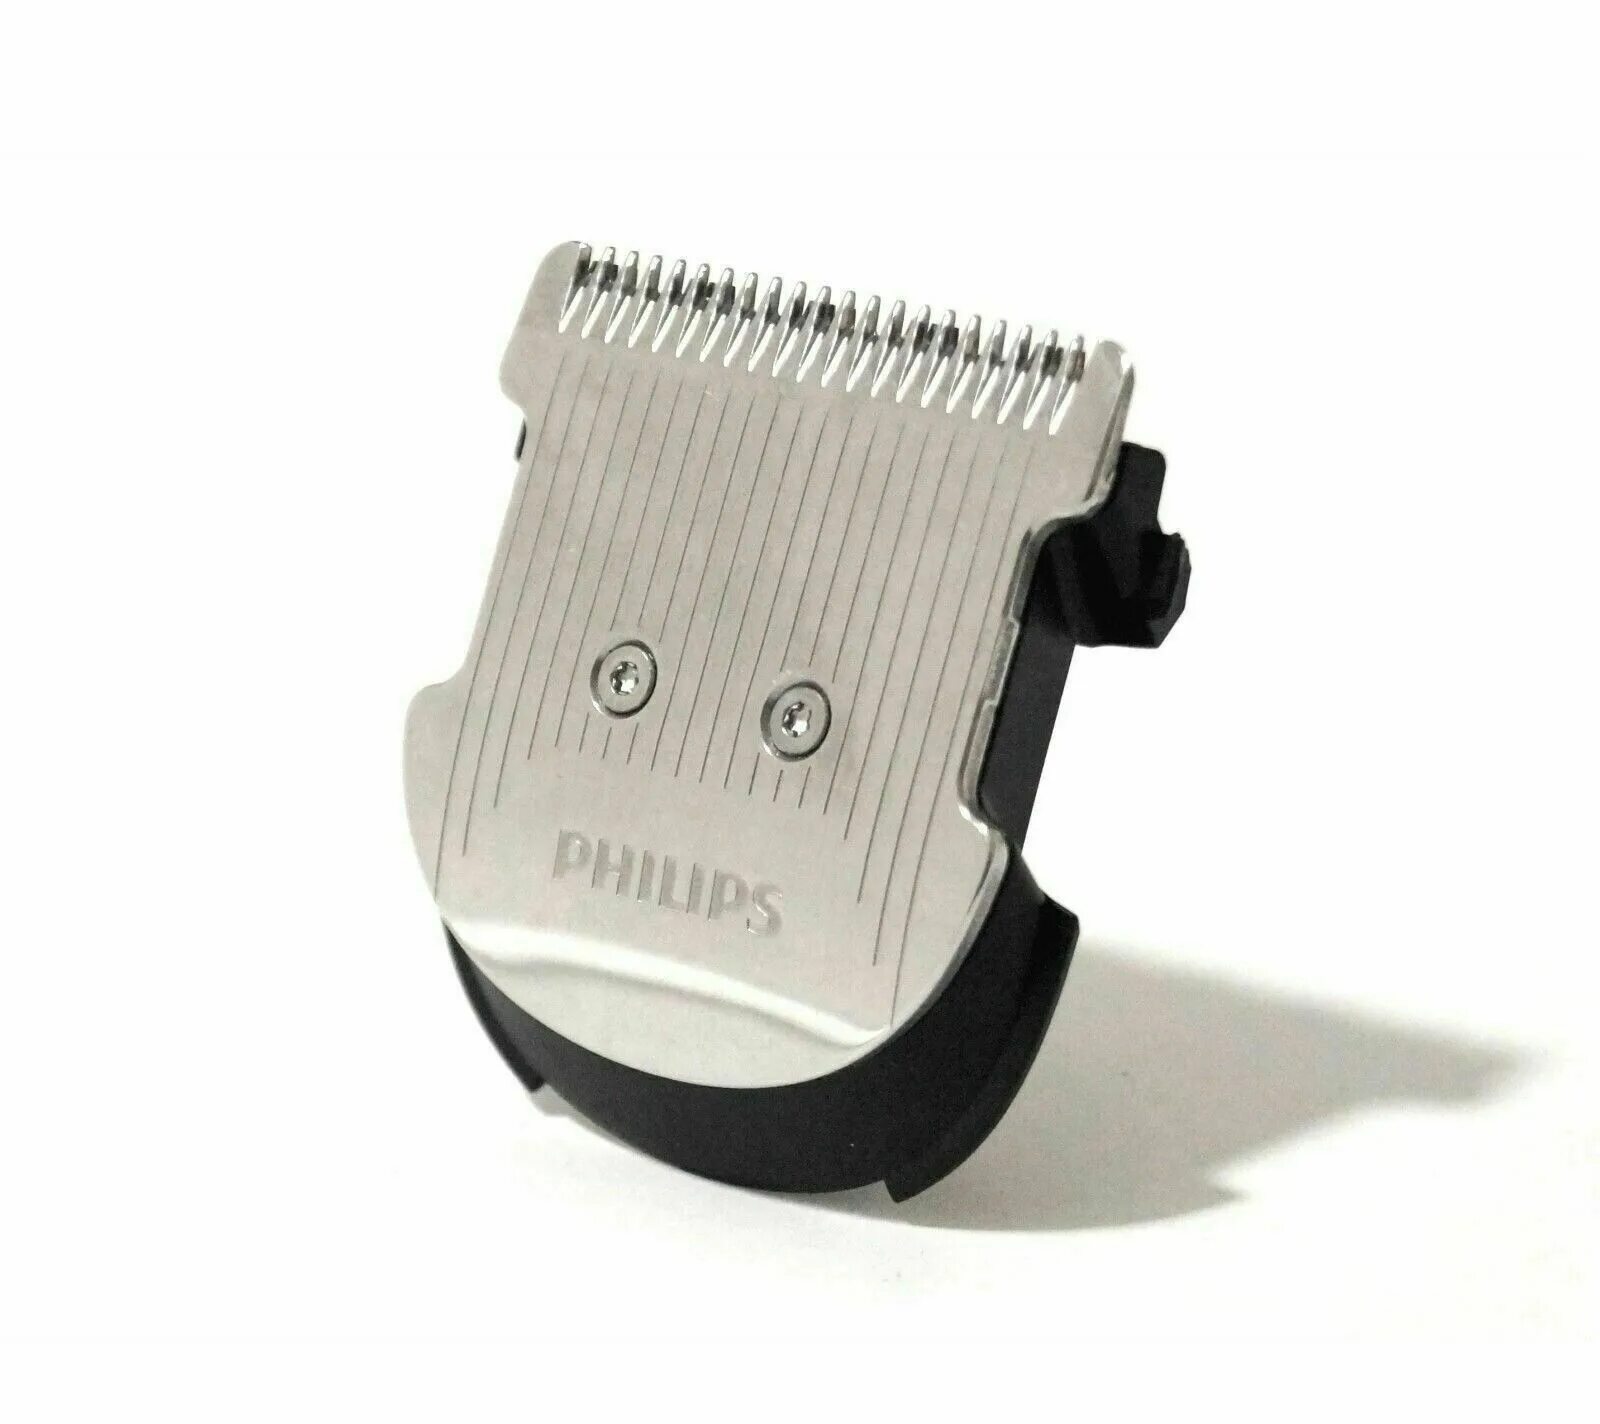 Ножи машинки philips. Ножевой блок для Philips hc5440. Ножевой блок для машинки Philips c241. Ножевой блок для машинки Philips HC 5612. Филипс 3400 машинка для стрижки.